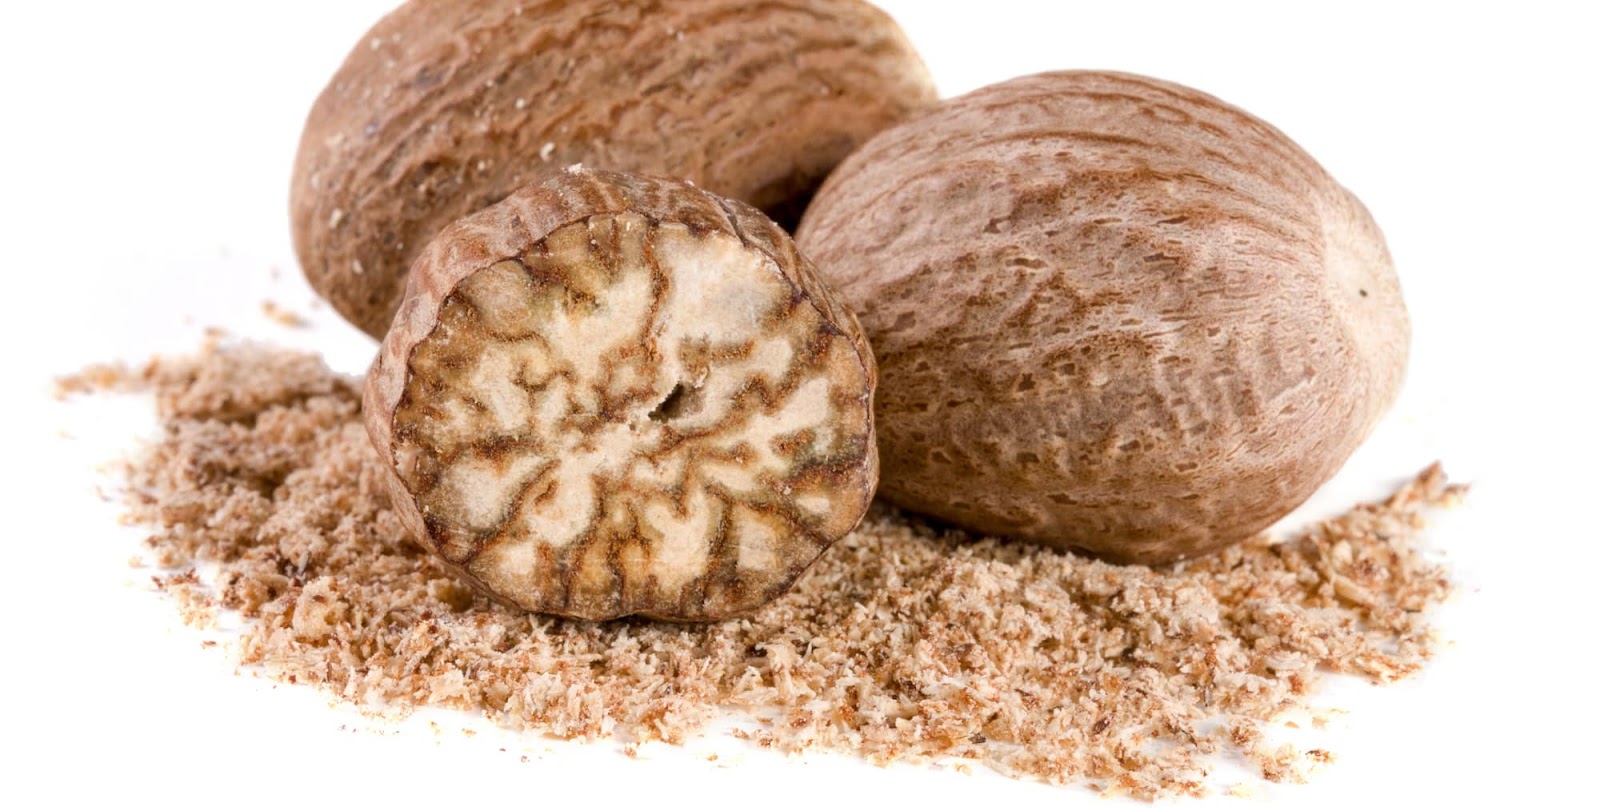 How to use nutmeg